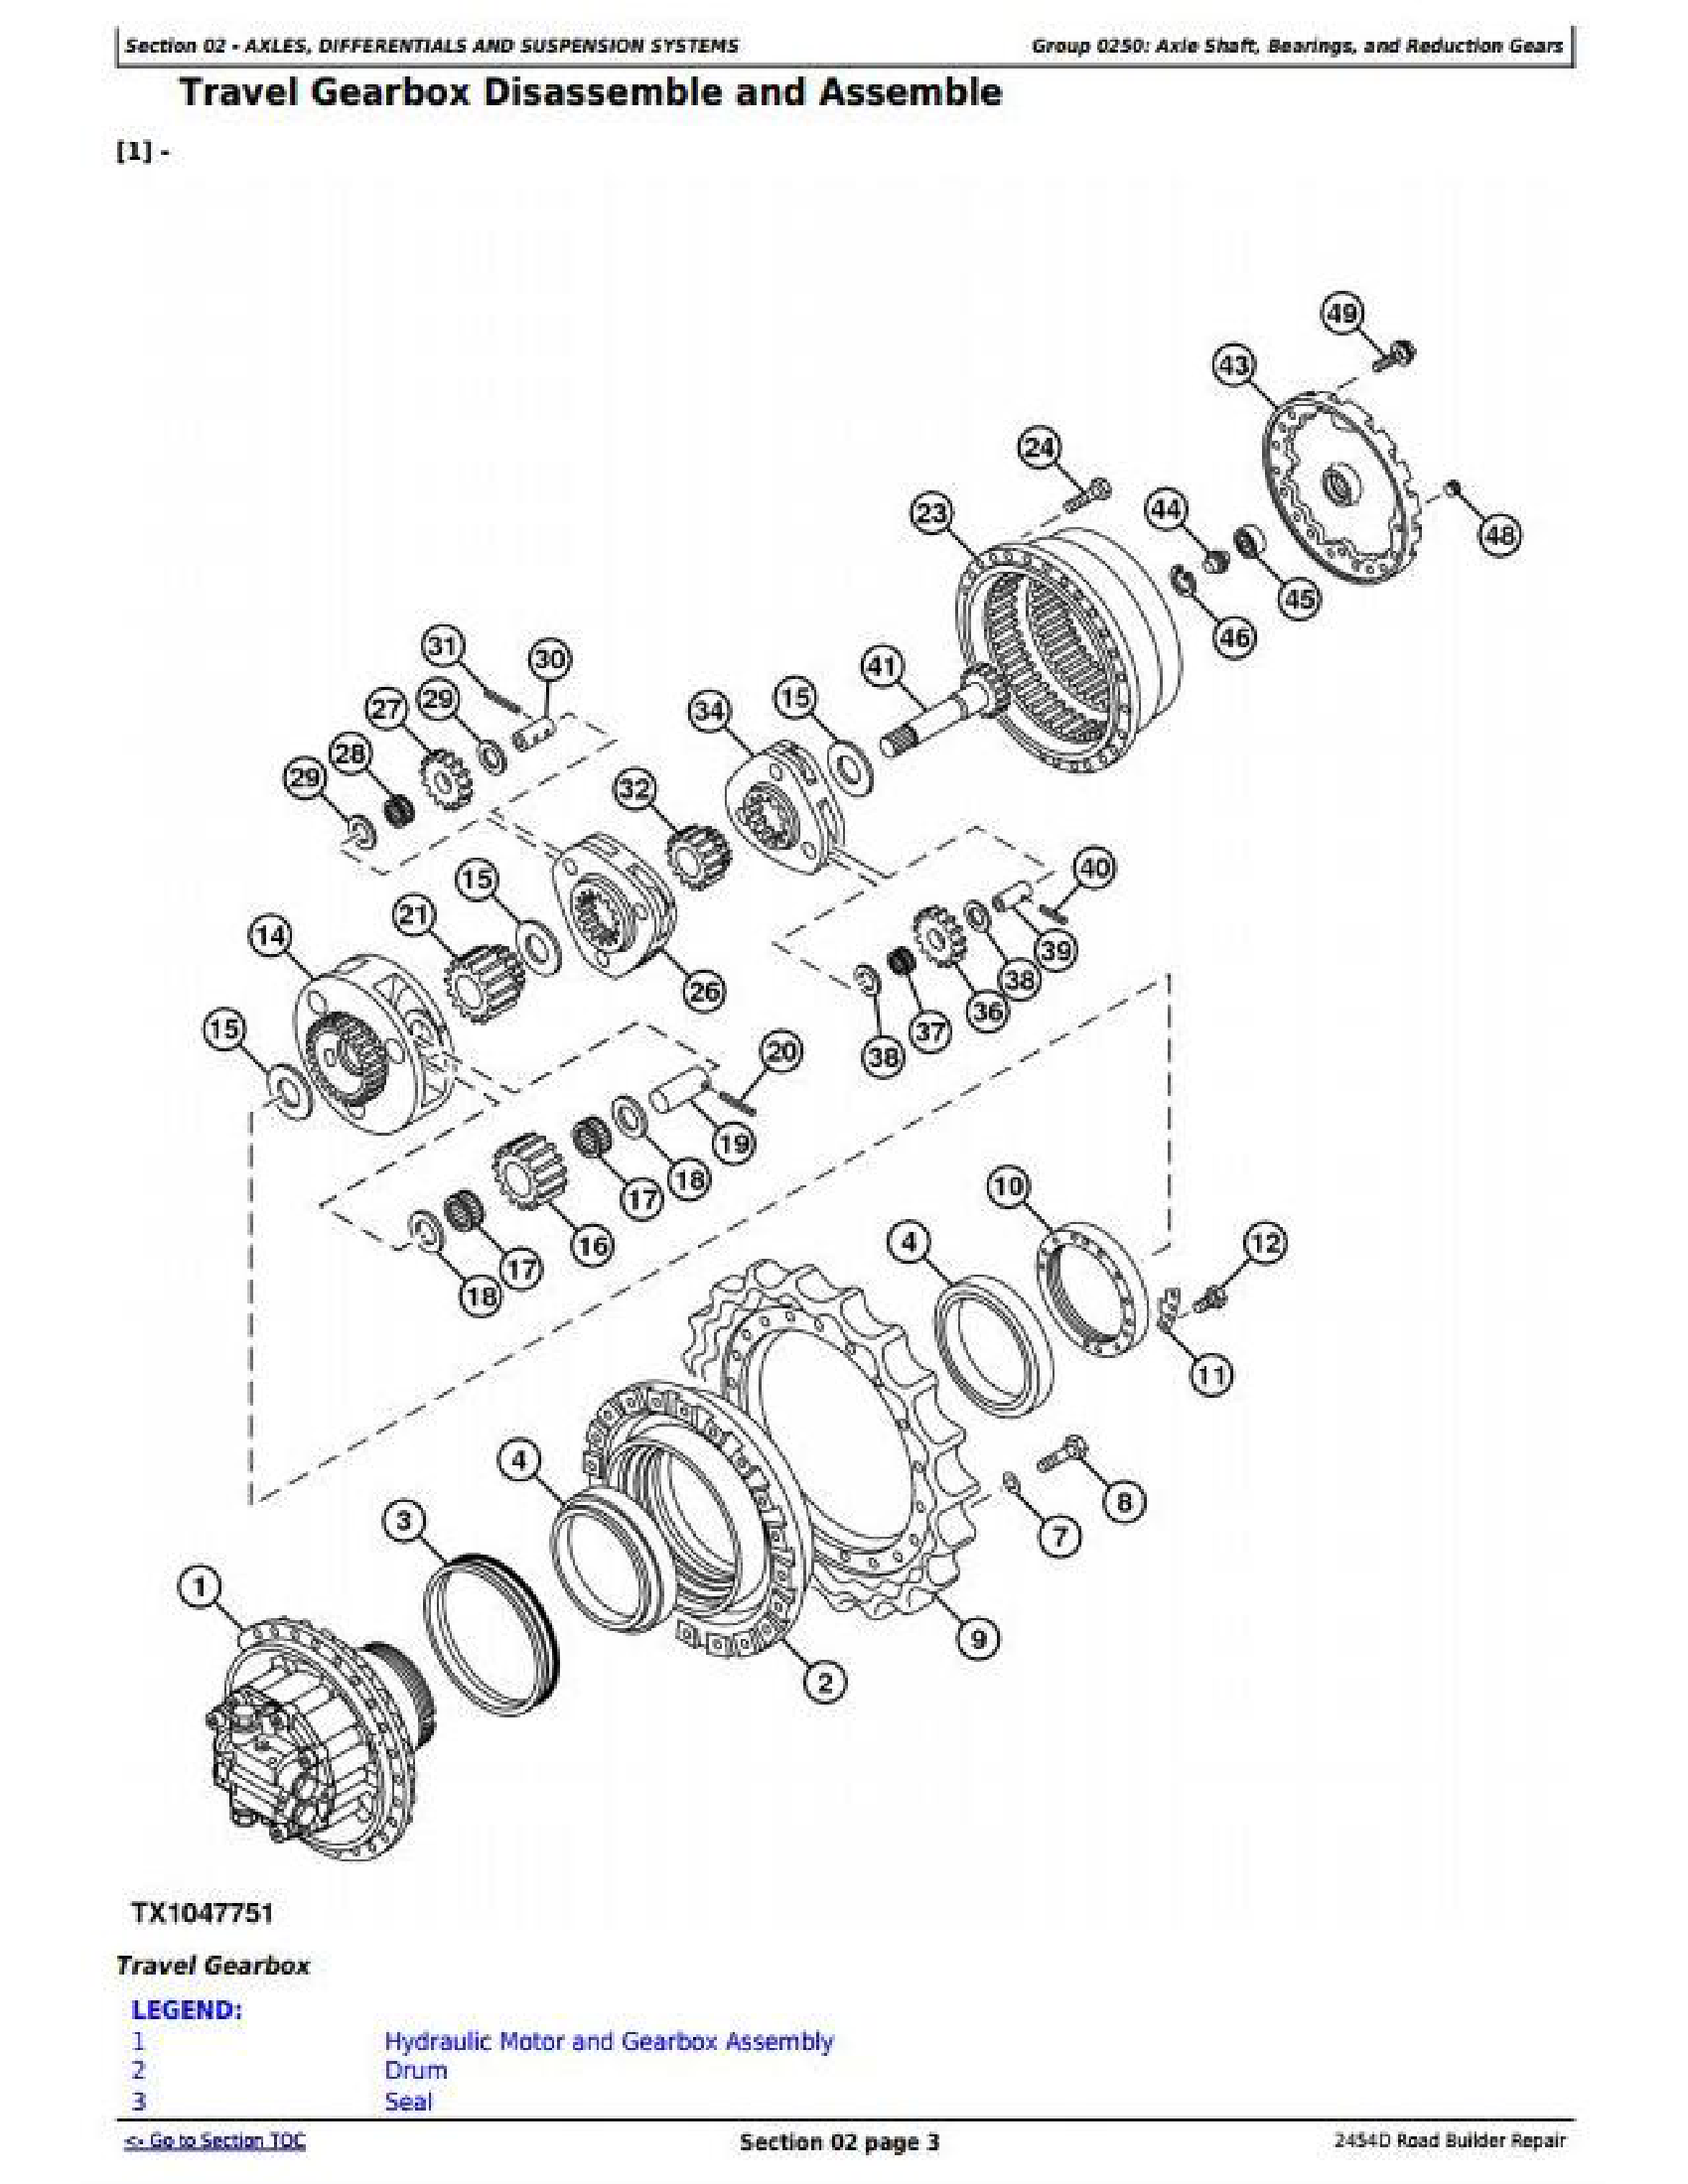 John Deere 740D manual pdf